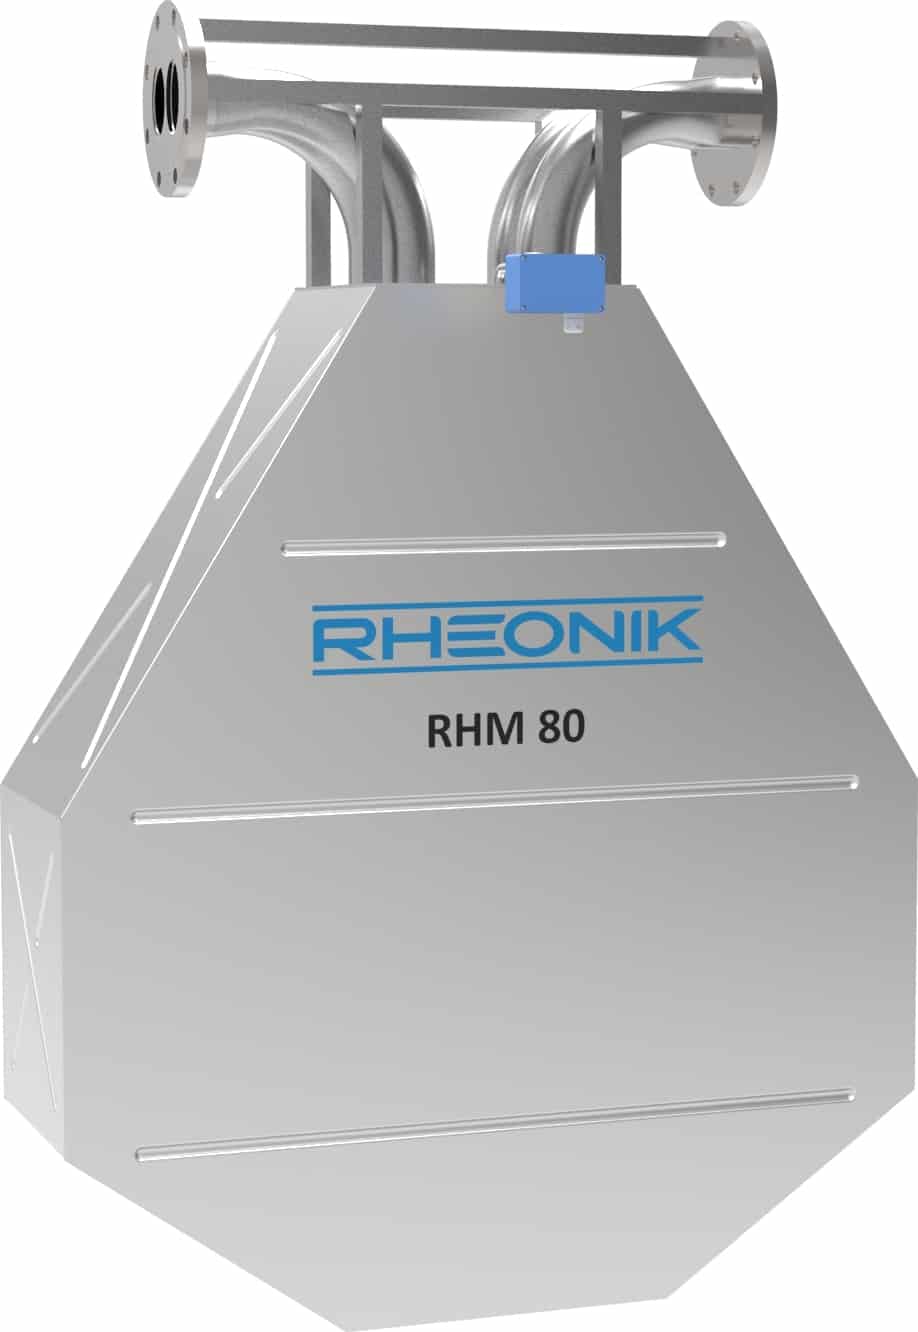 Rheonik RHM 80 Flowmeter